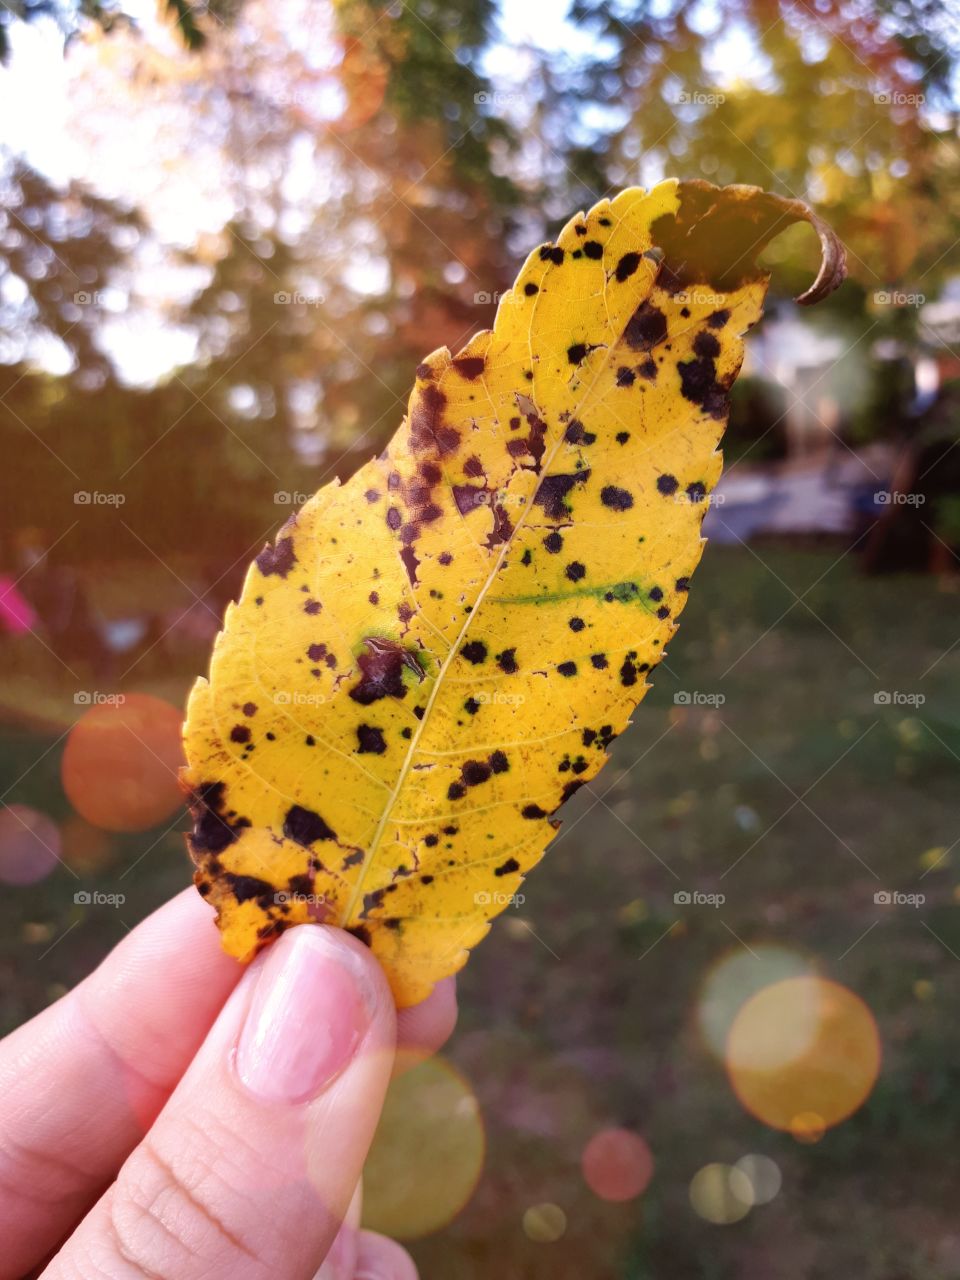 a single fall leaf